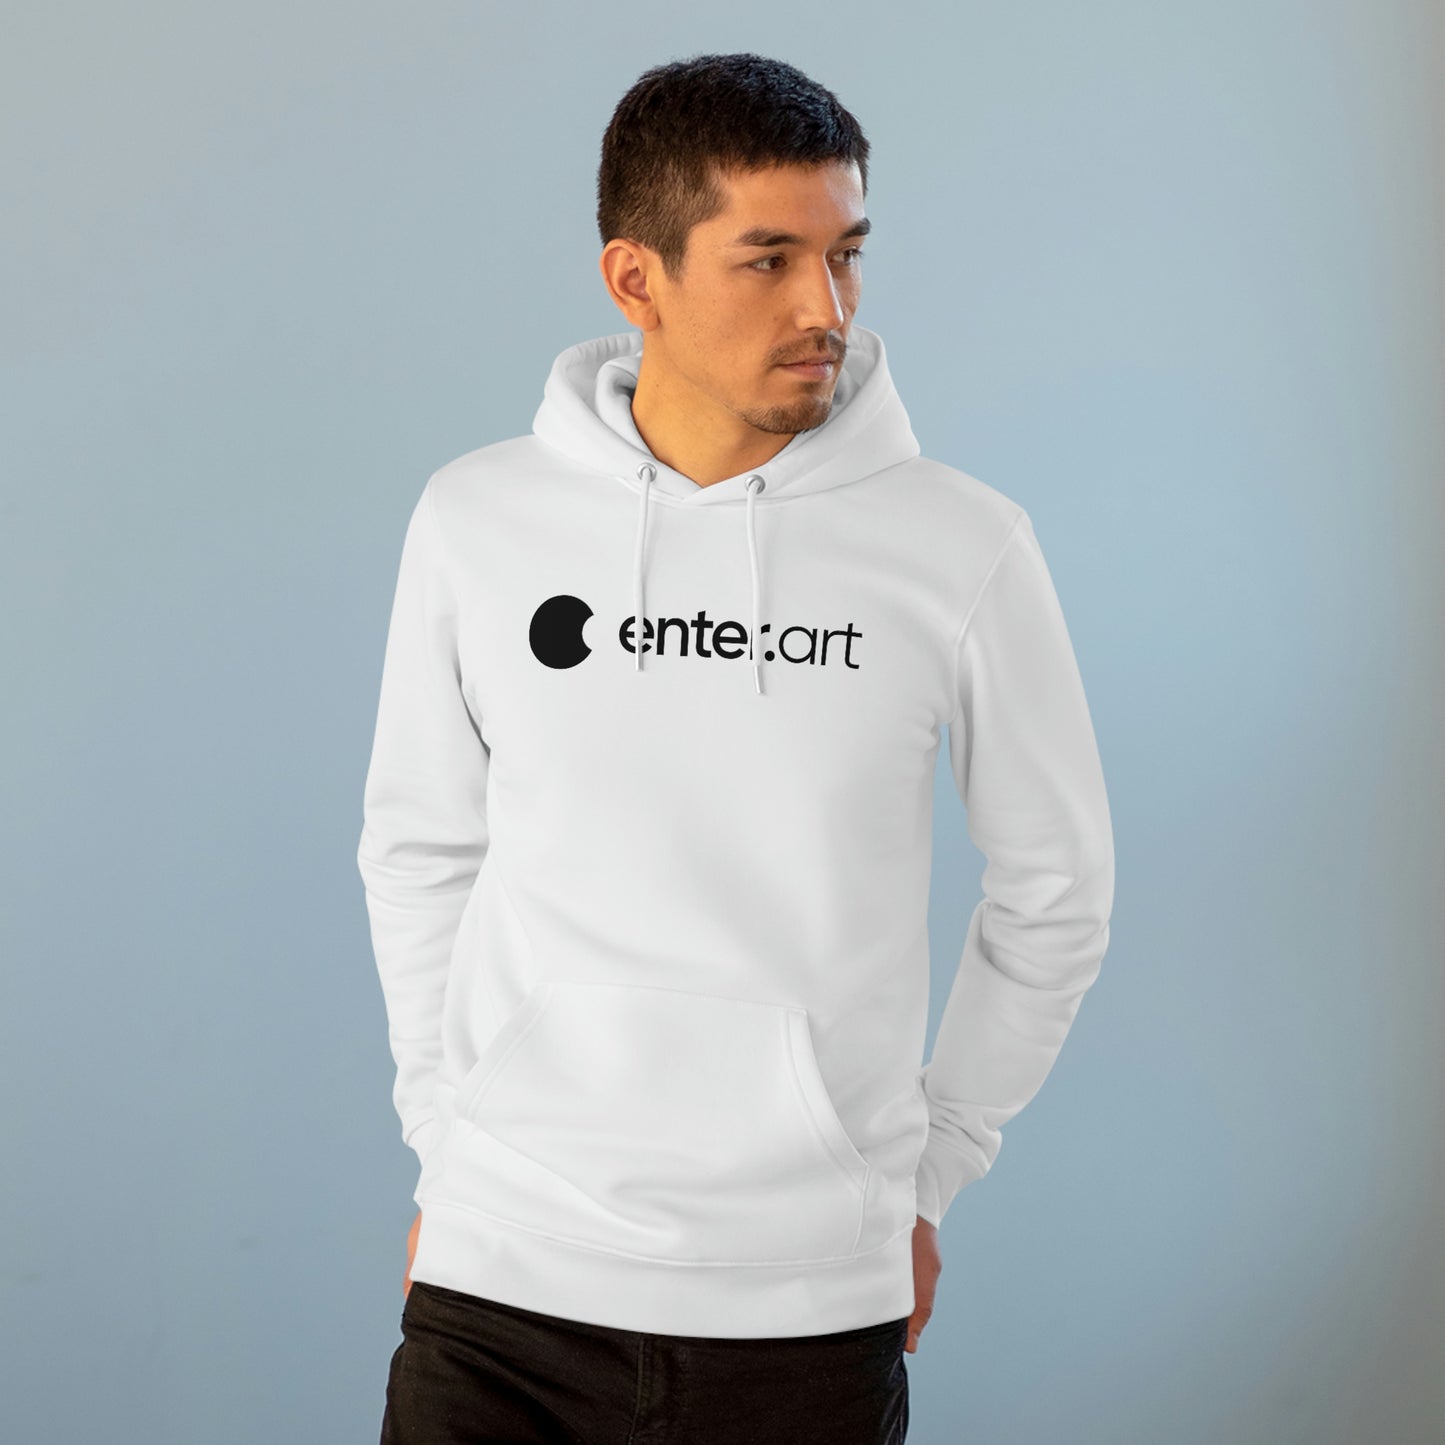 enter.art - White hoodie